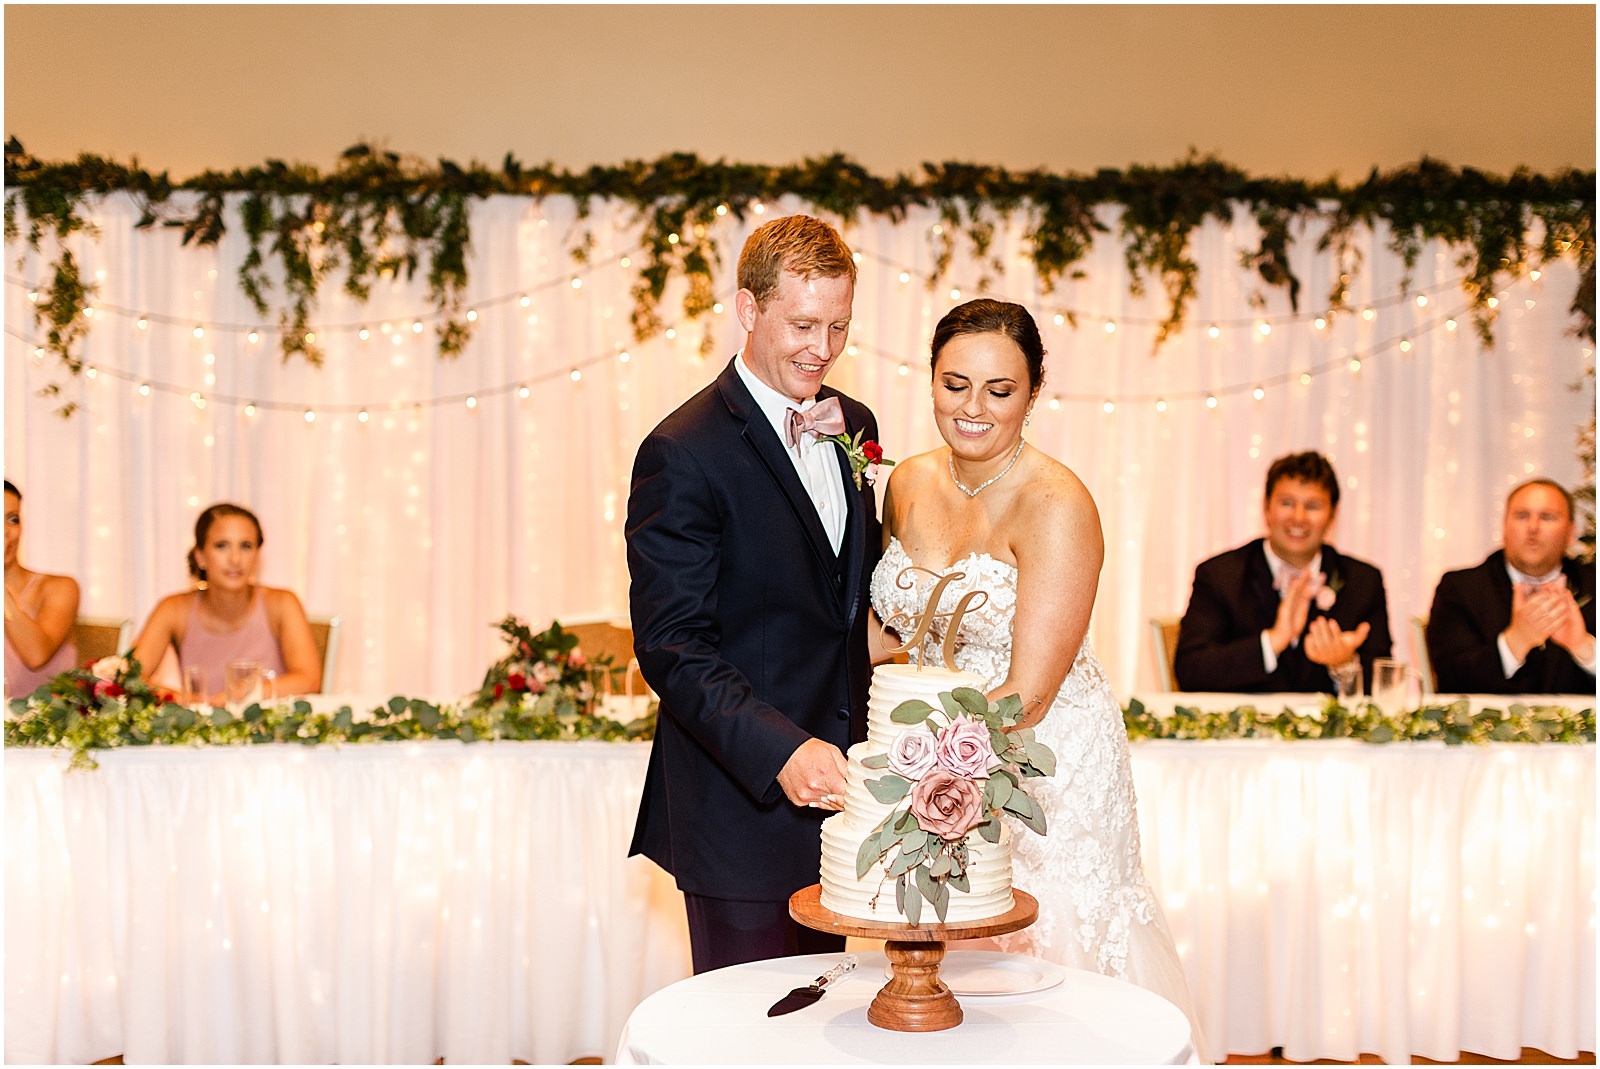 Deidra and Andrew | A Huntingburgh Indiana Wedding Bret and Brandie | Evansville Photographers | @bretandbrandie-0140.jpg